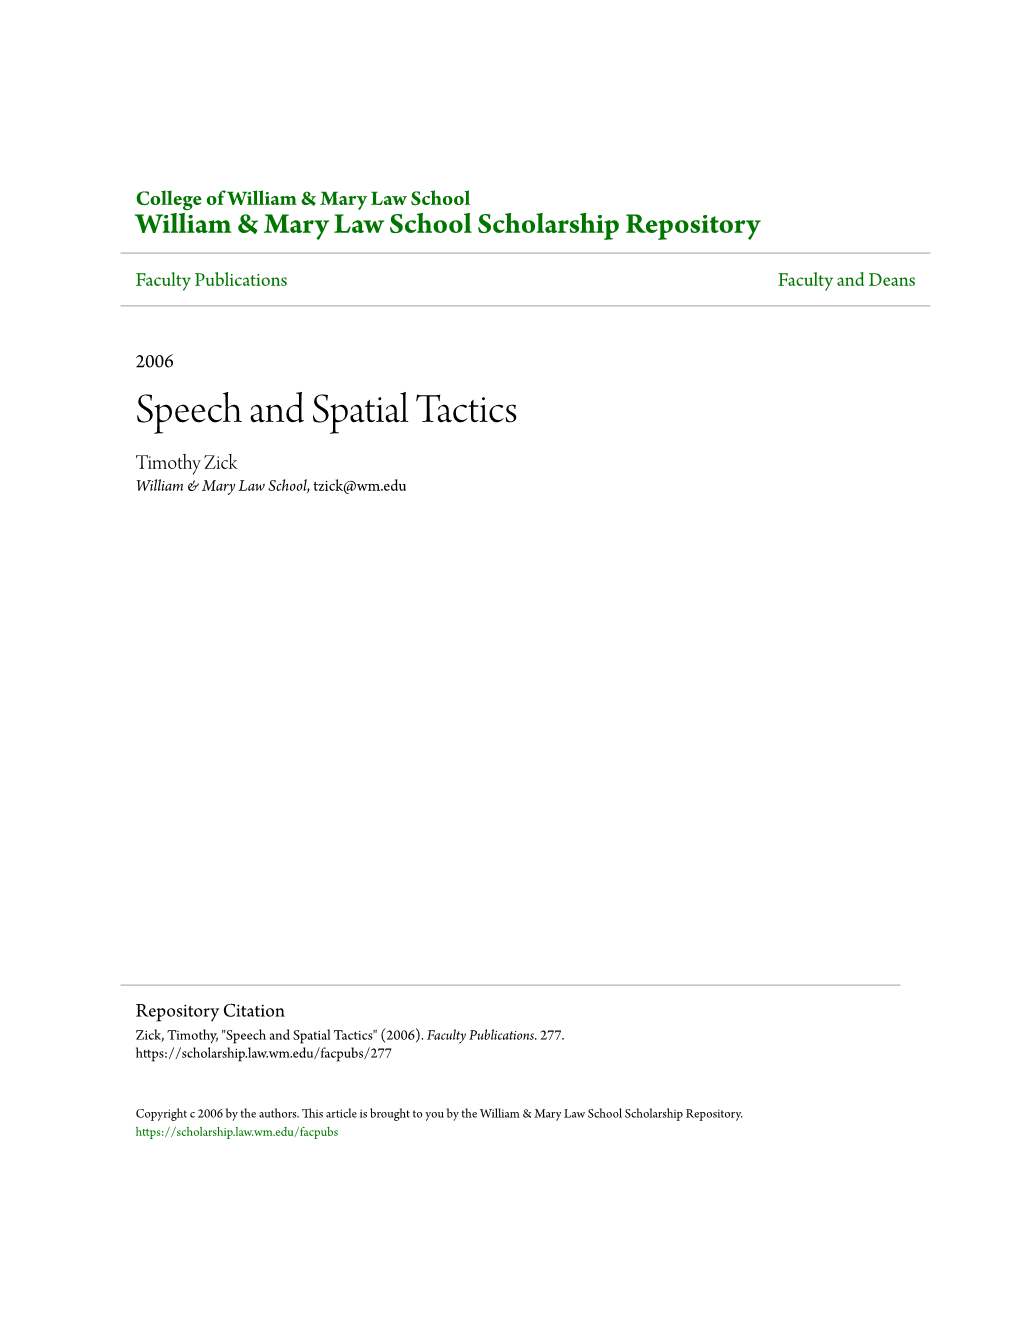 Speech and Spatial Tactics Timothy Zick William & Mary Law School, Tzick@Wm.Edu